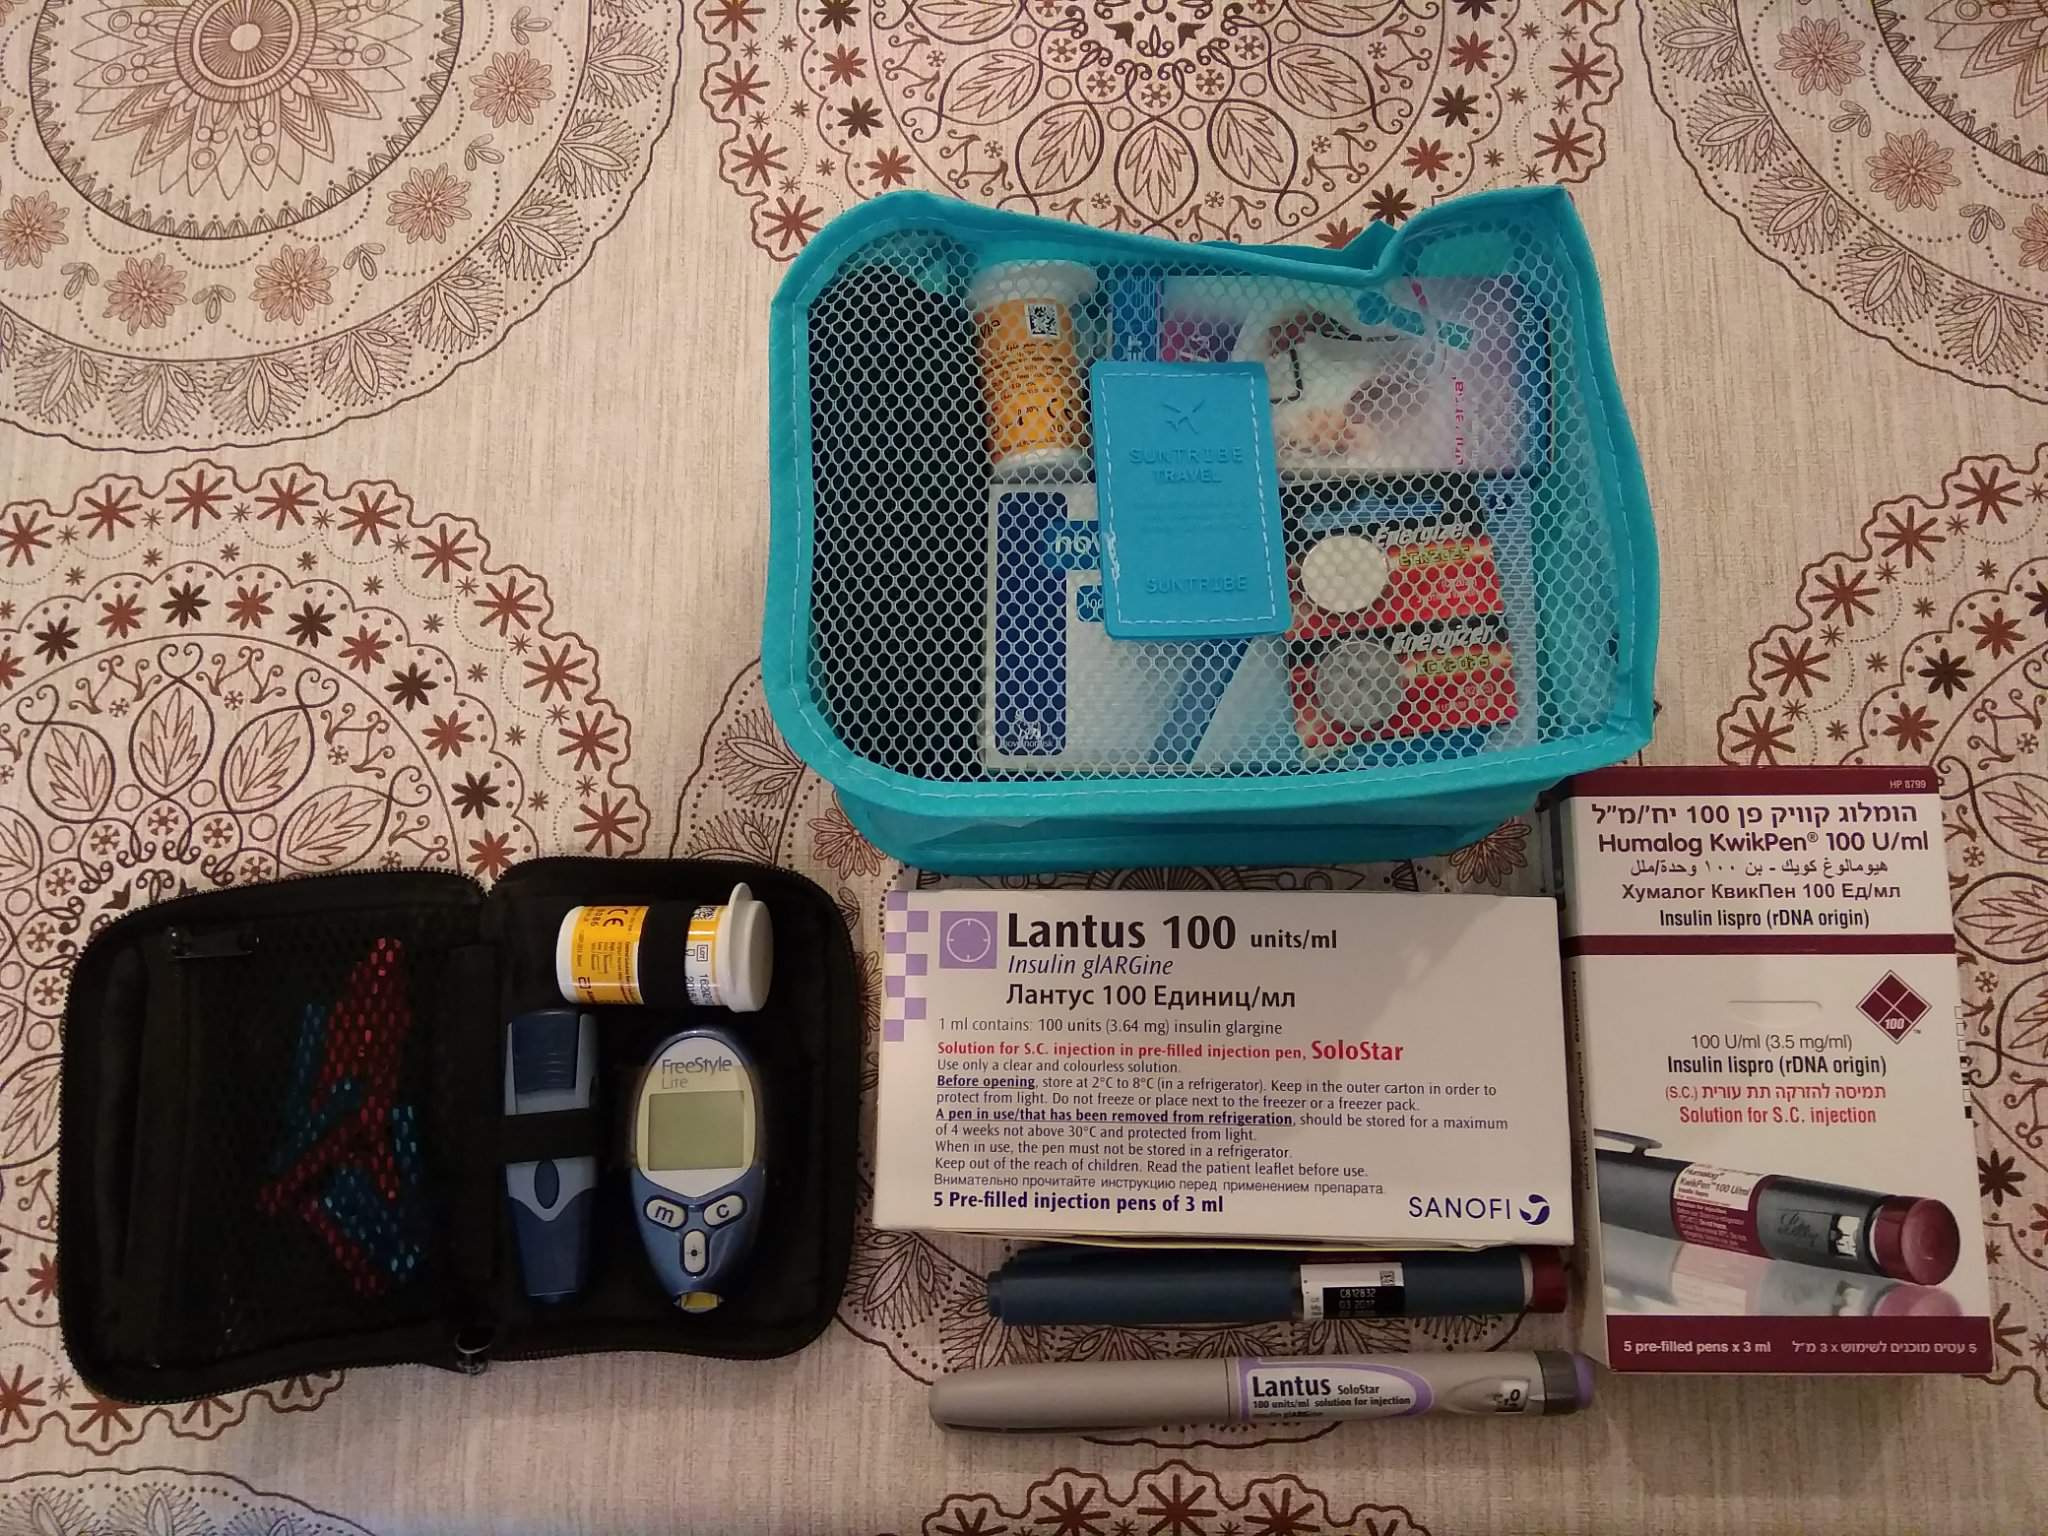 Diabetes Supplies